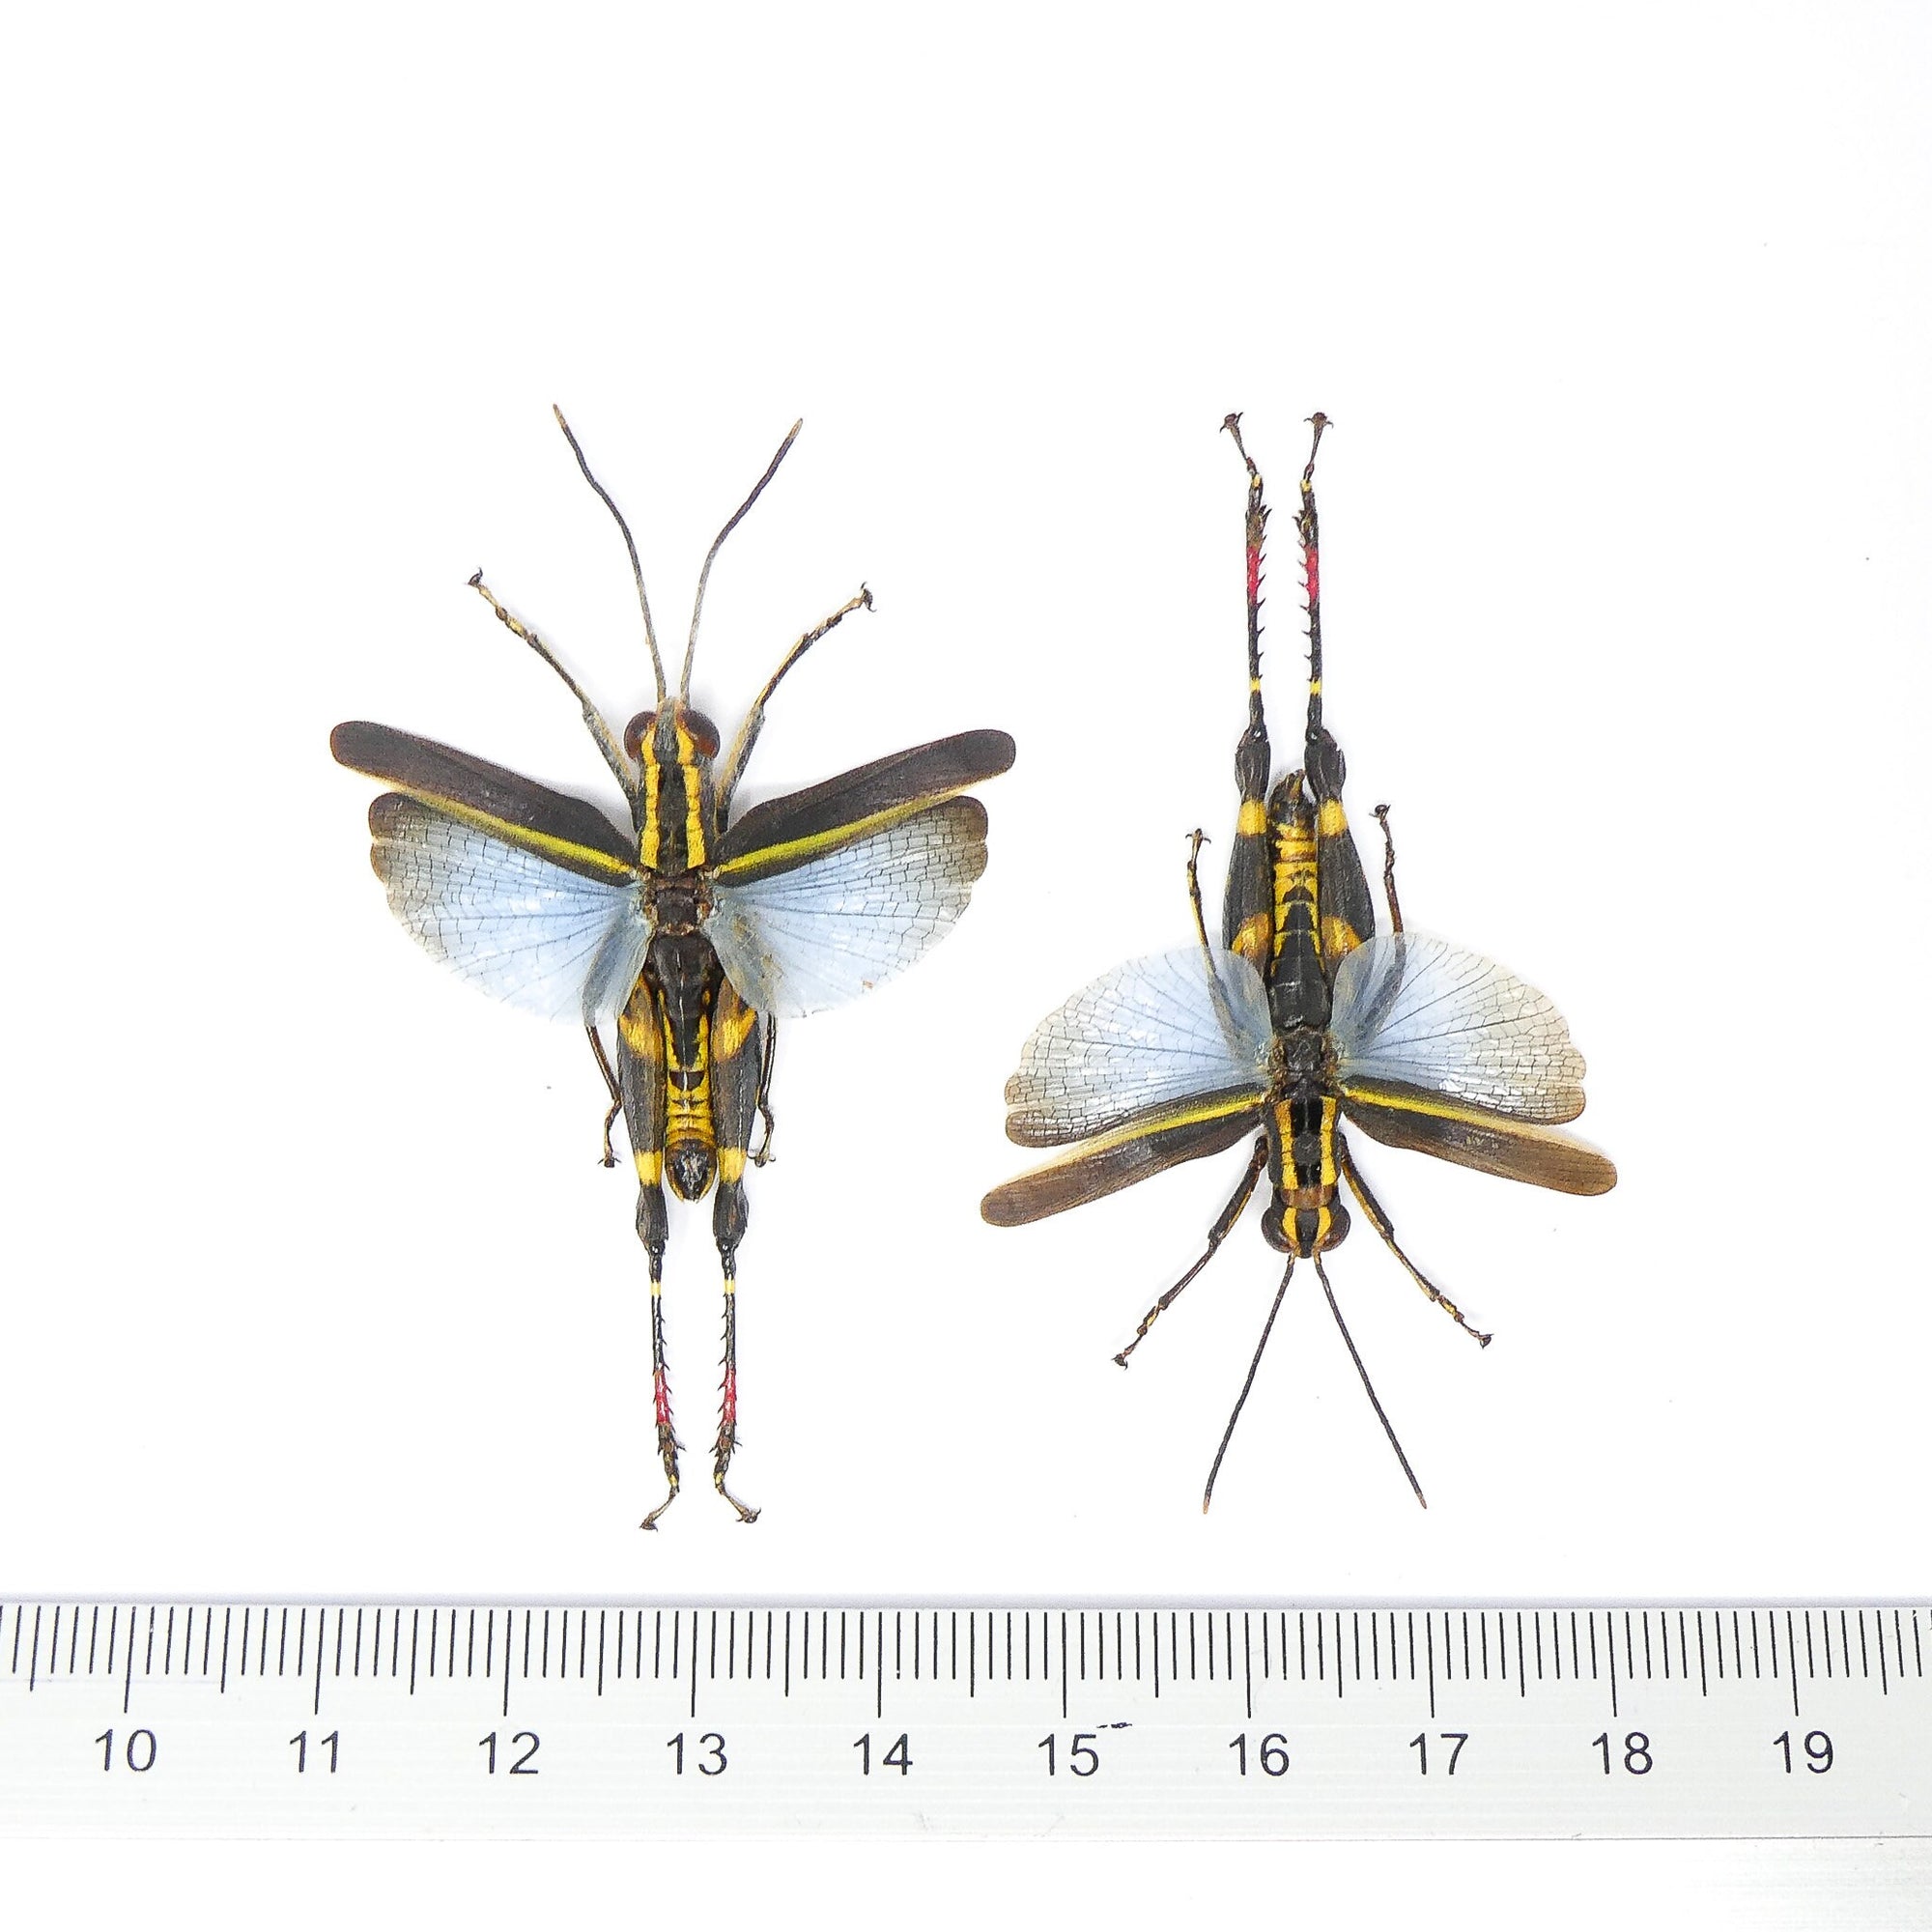 Two (2) Traulia azureipennis (Spread) A1 Ethically Sourced Entomology Specimens 120mm Wingspan